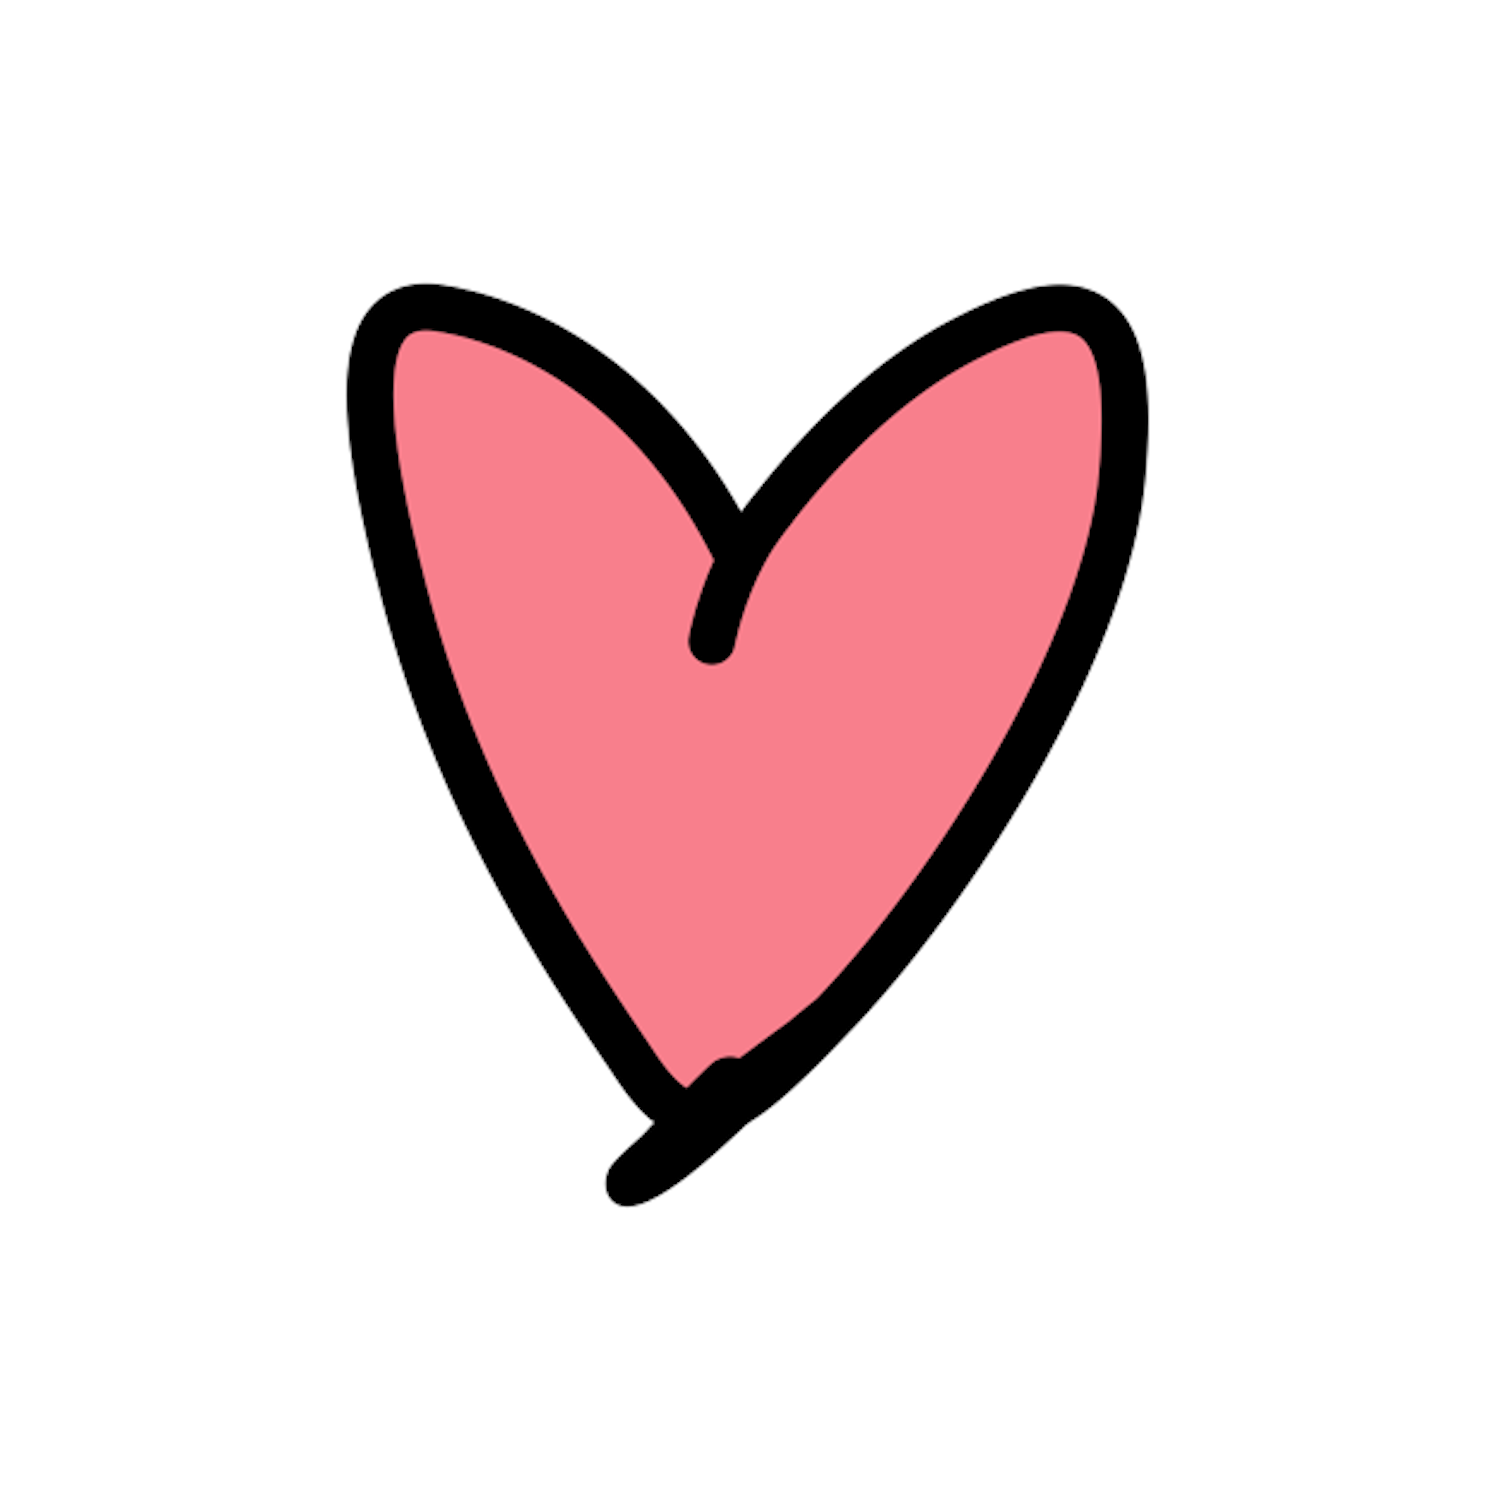 Image result for pink heart